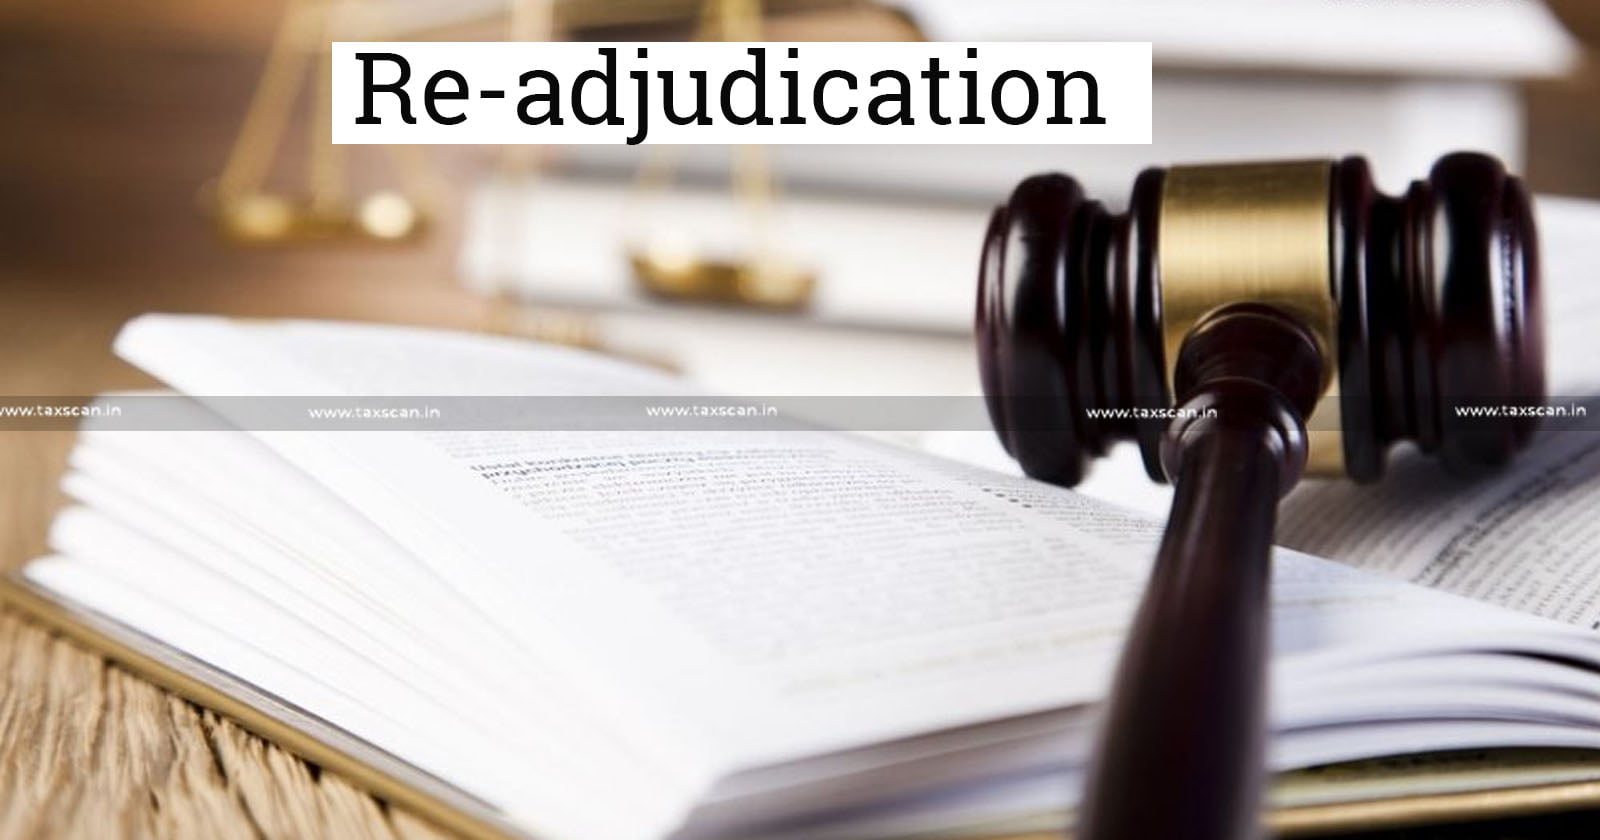 ITAT - re-adjudication - LTCG - ITAT directs readjudication with respect to LTCG - Civil court - taxscan